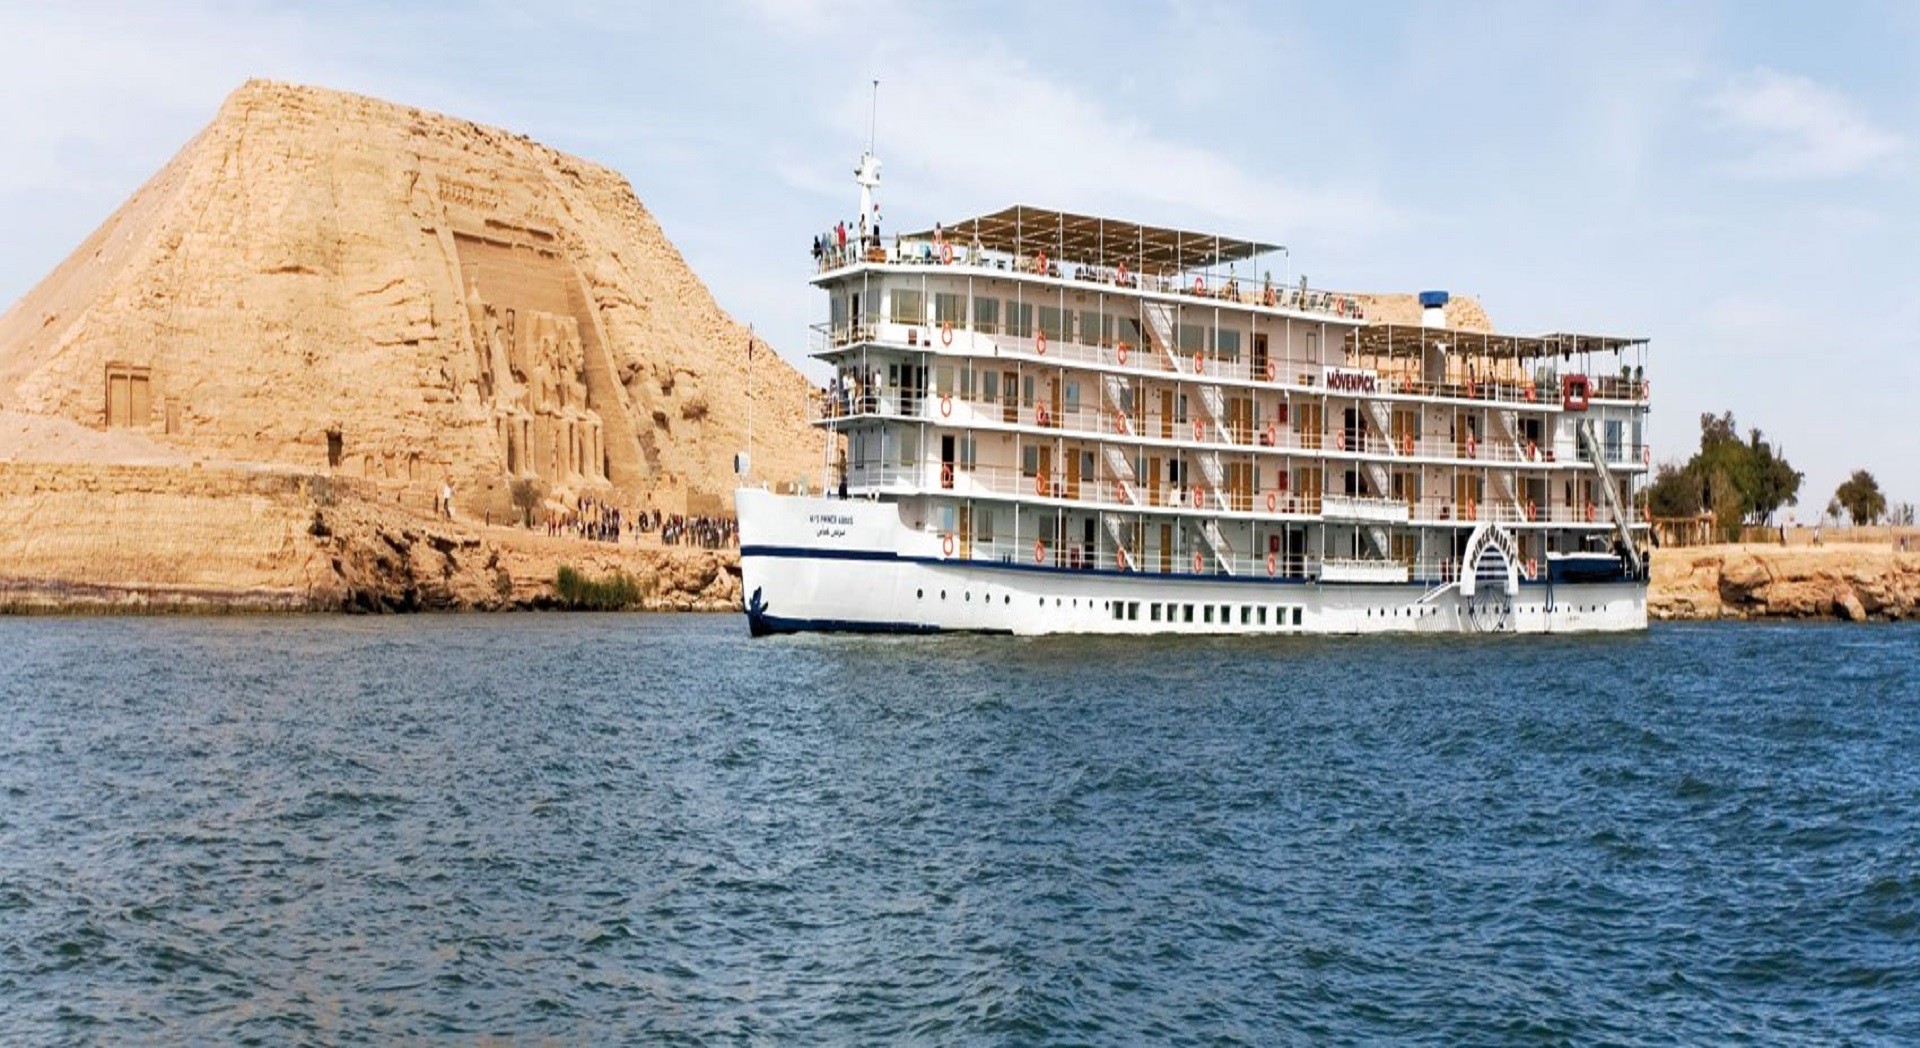 Movenpick Prince Abbas Lake Nasser Cruise